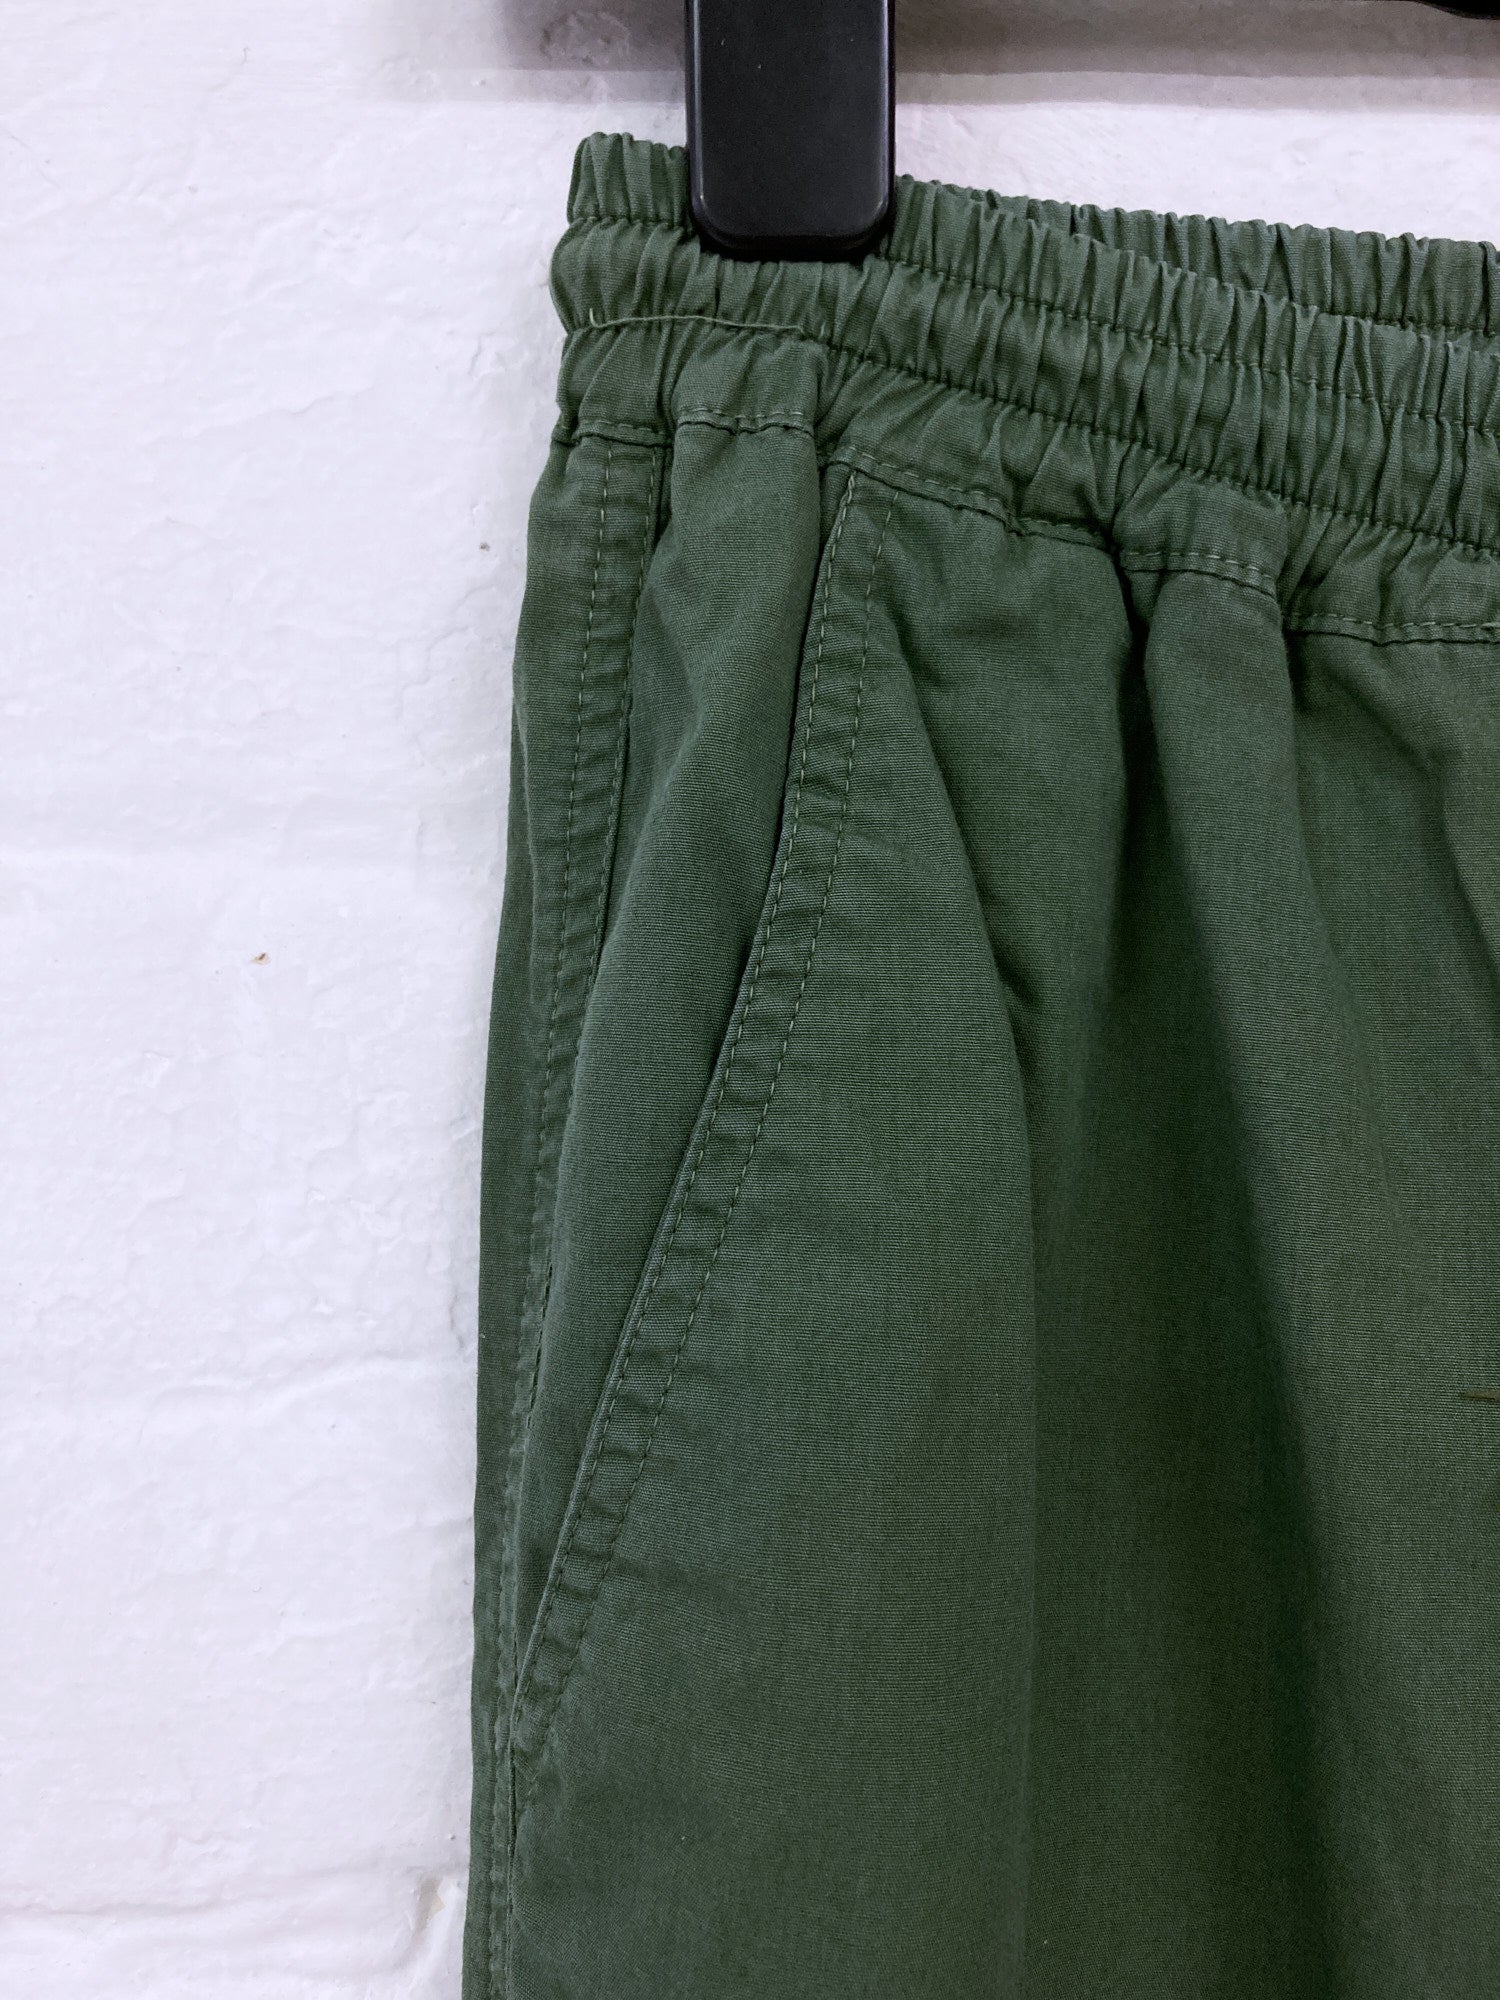 Jean Colonna khaki-green cotton elastic waist trousers - size 46